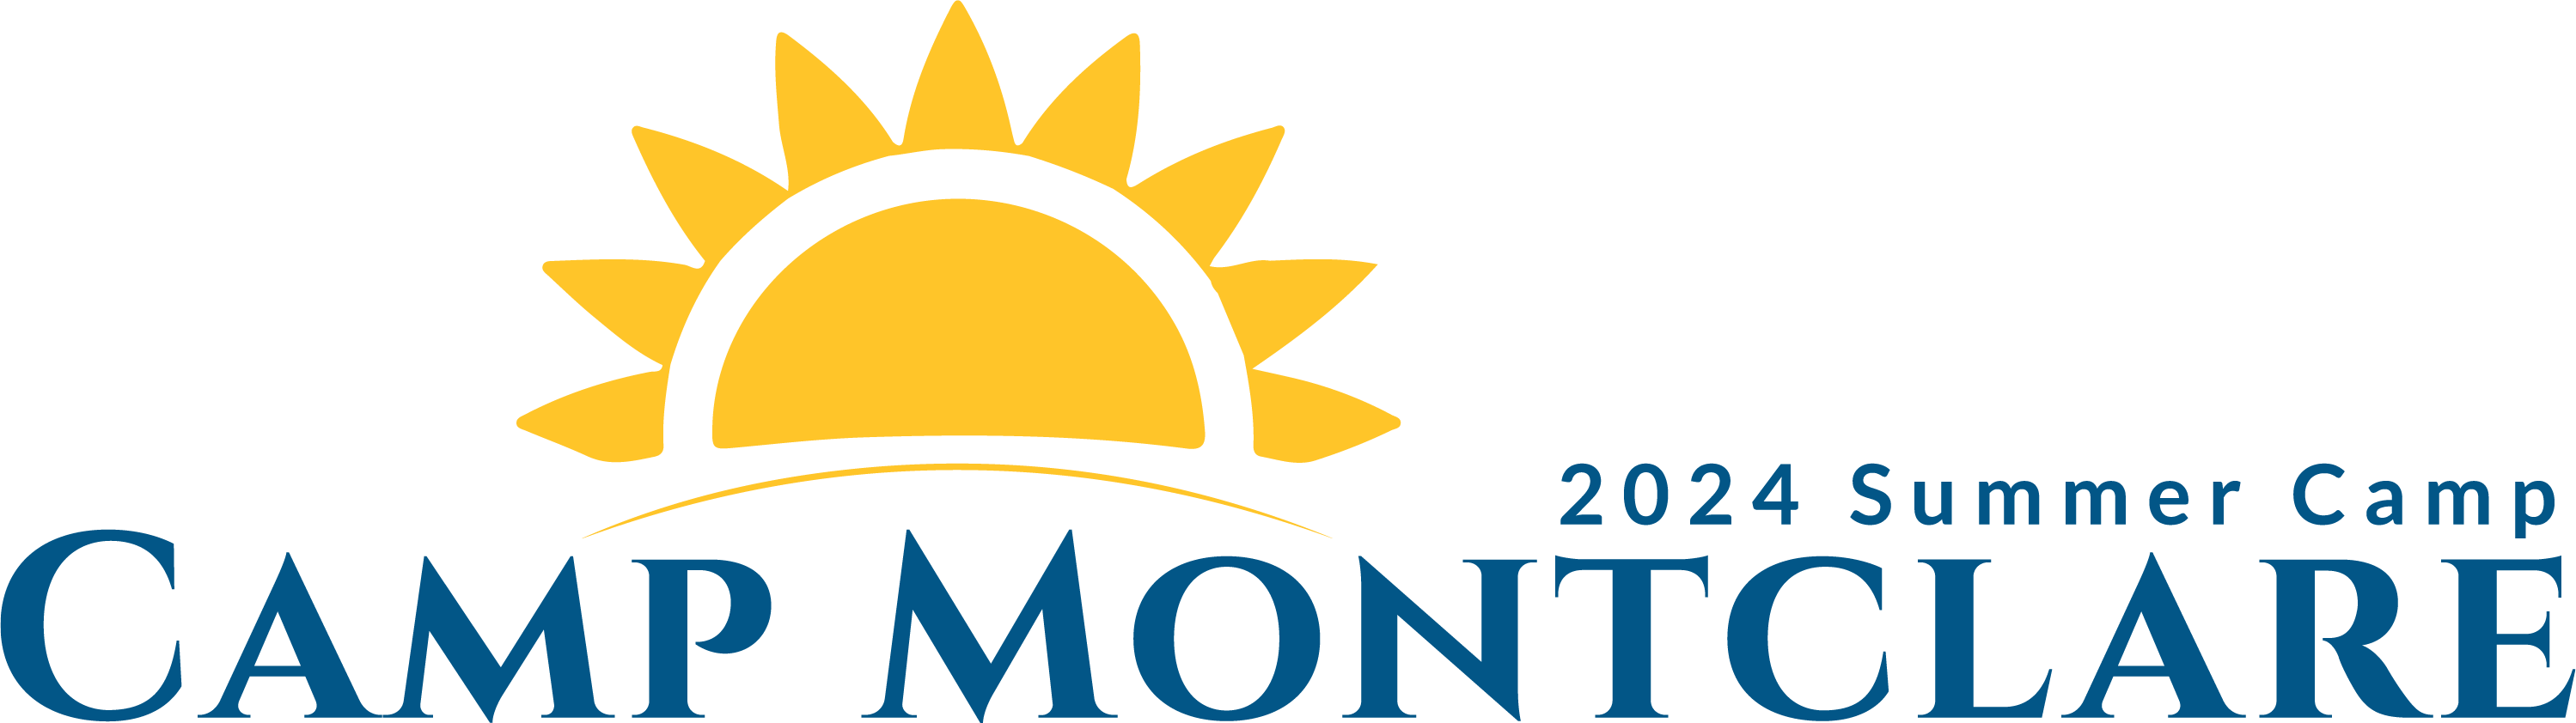 Camp Montclare Summer Camp 2024